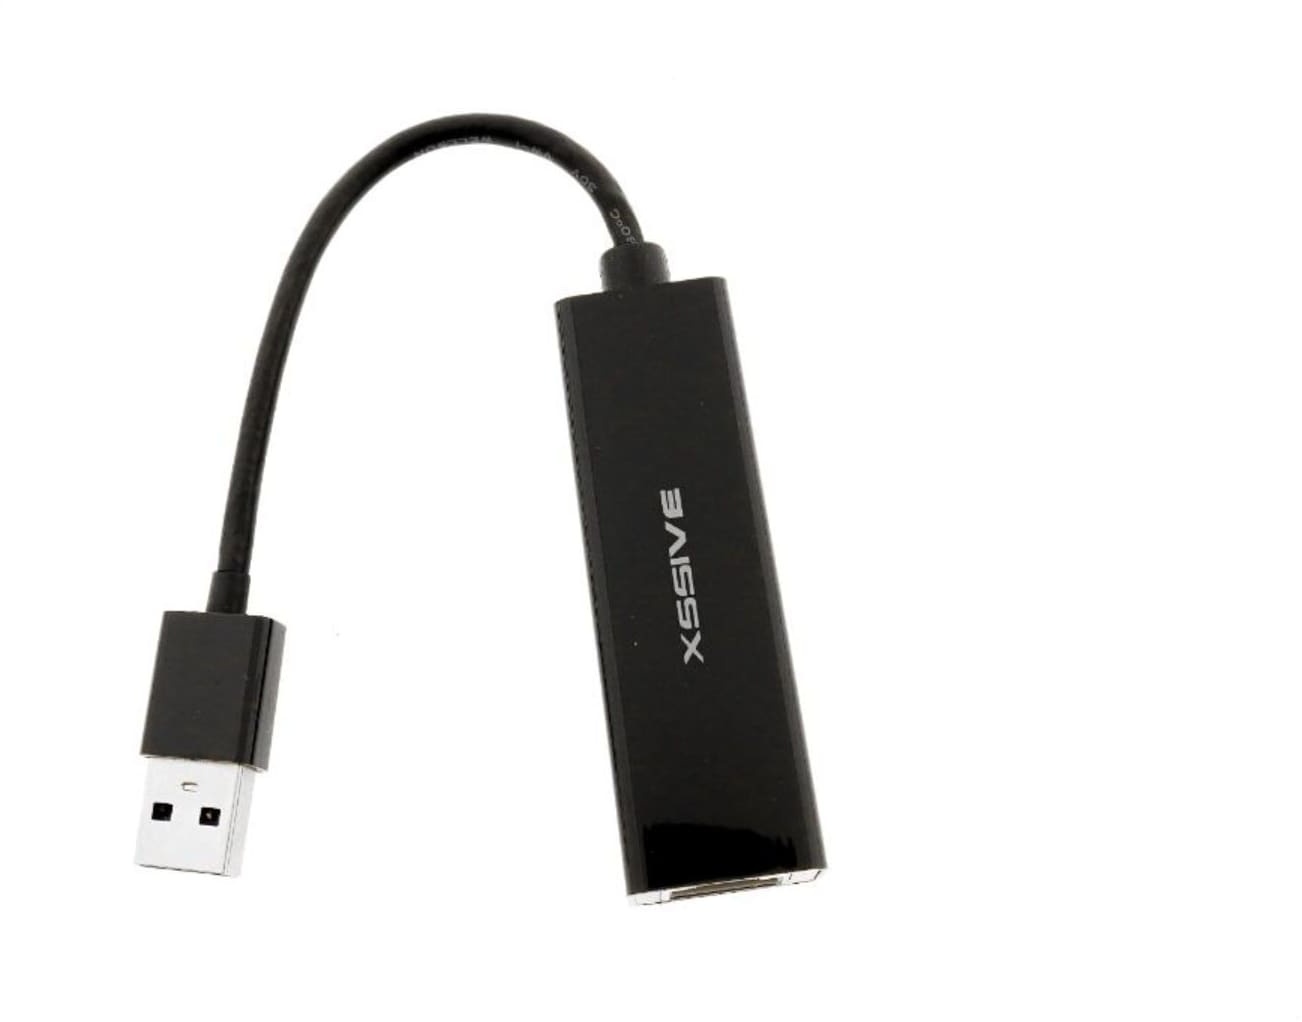 USB 3.0 zu Ethernet Adapter 1000 Mbit/s Ethernet-Netzwerk